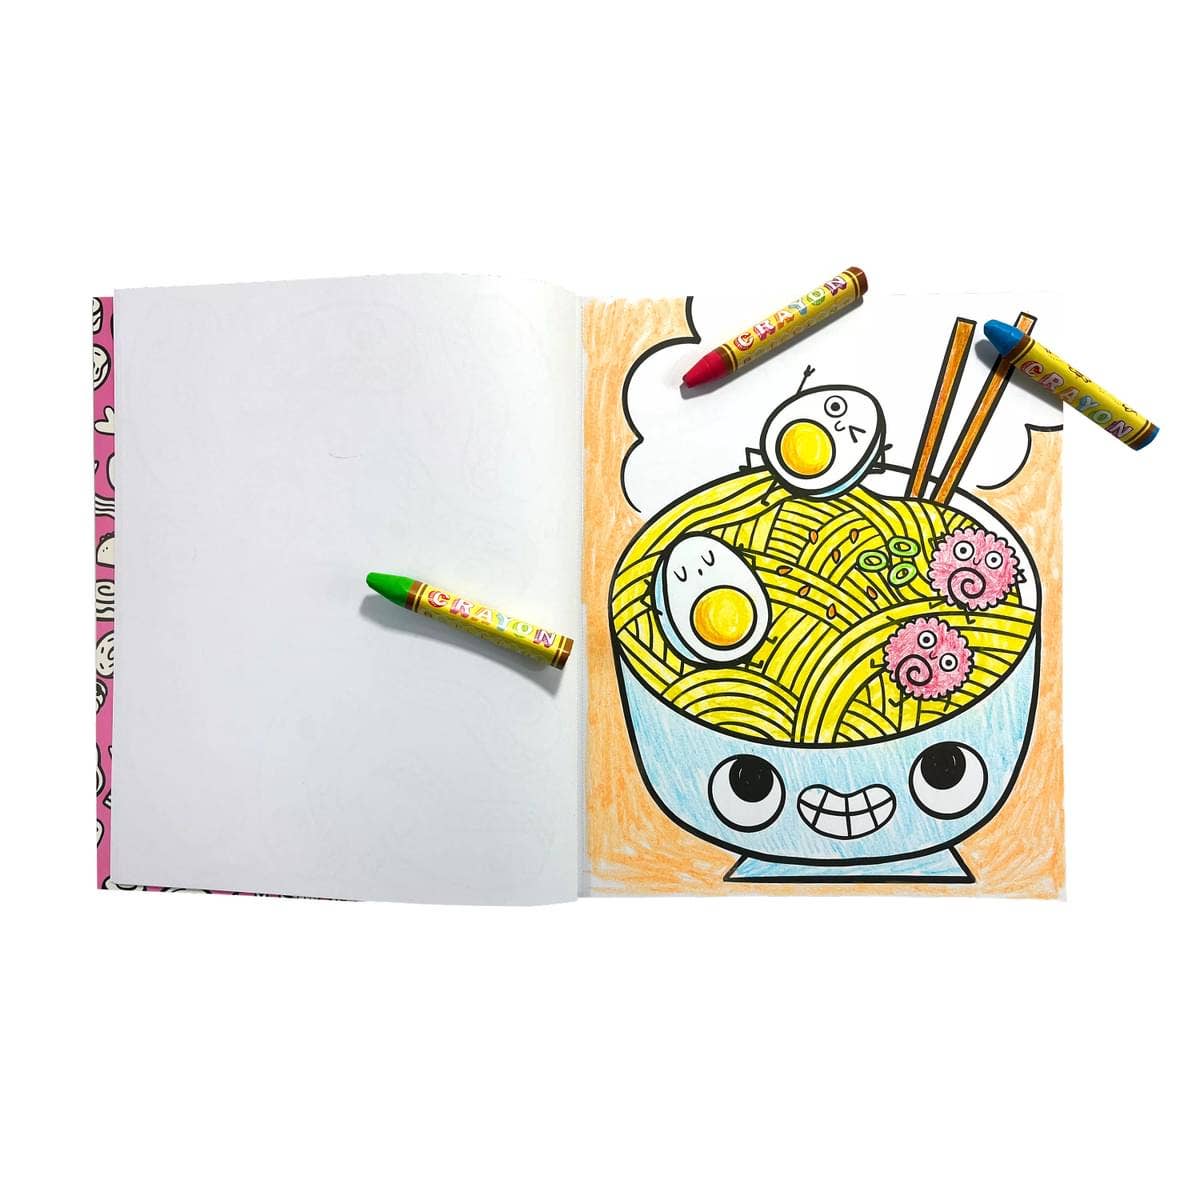 118-306 - Color-in' Book: Happy Snacks (8" x 10") - Magpies Paducah